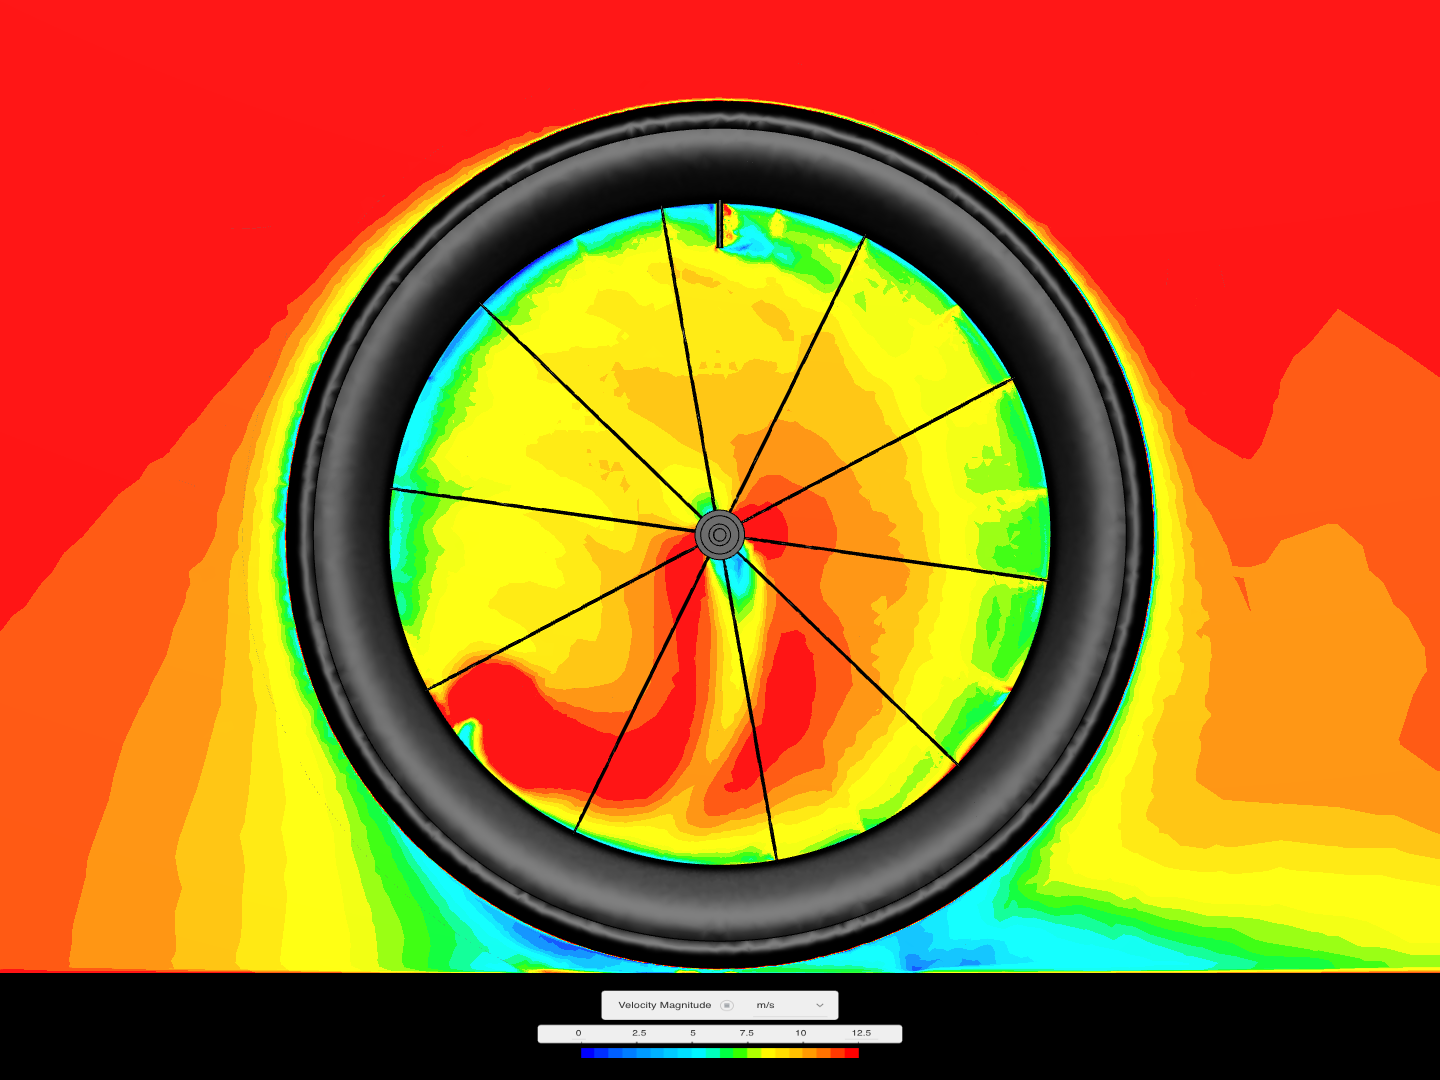 Wheel (No Weight) image